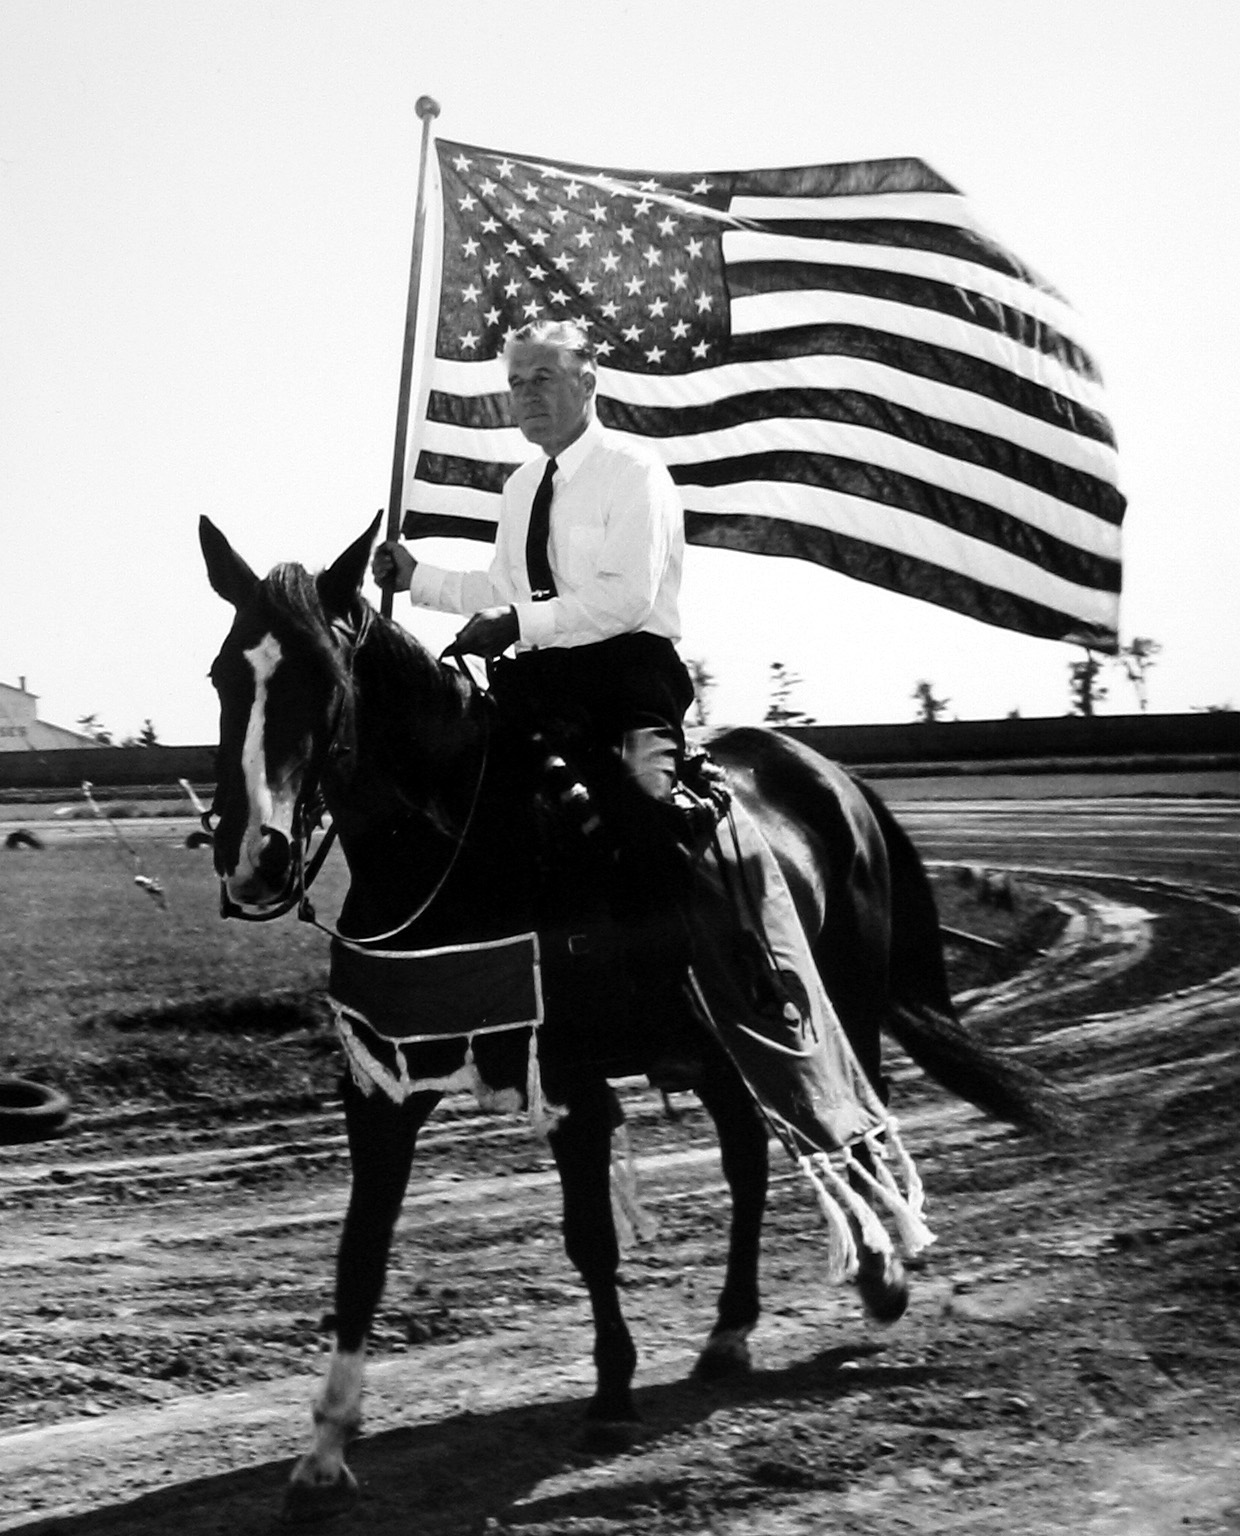 <img src="George Romney.jpg" alt="Romney American flag" />